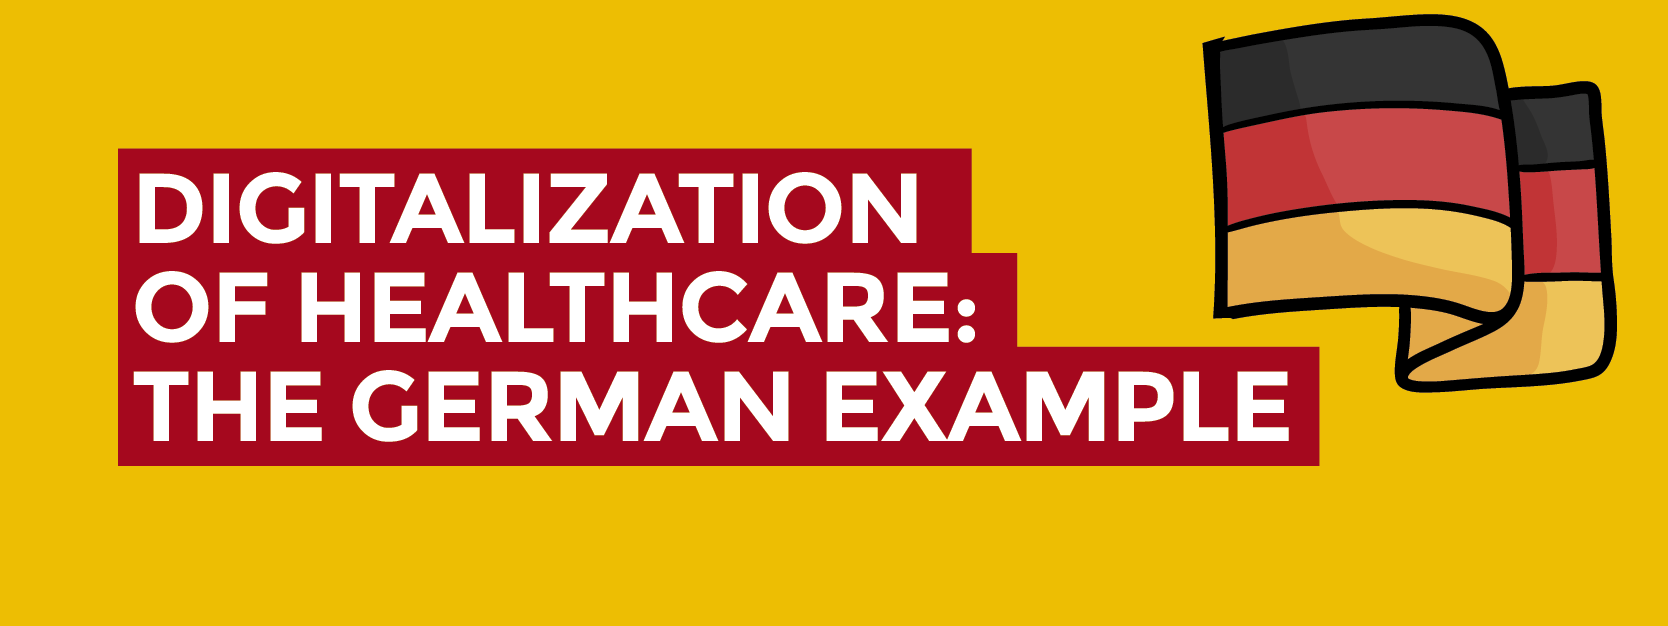 digitalization of healthcare: german example